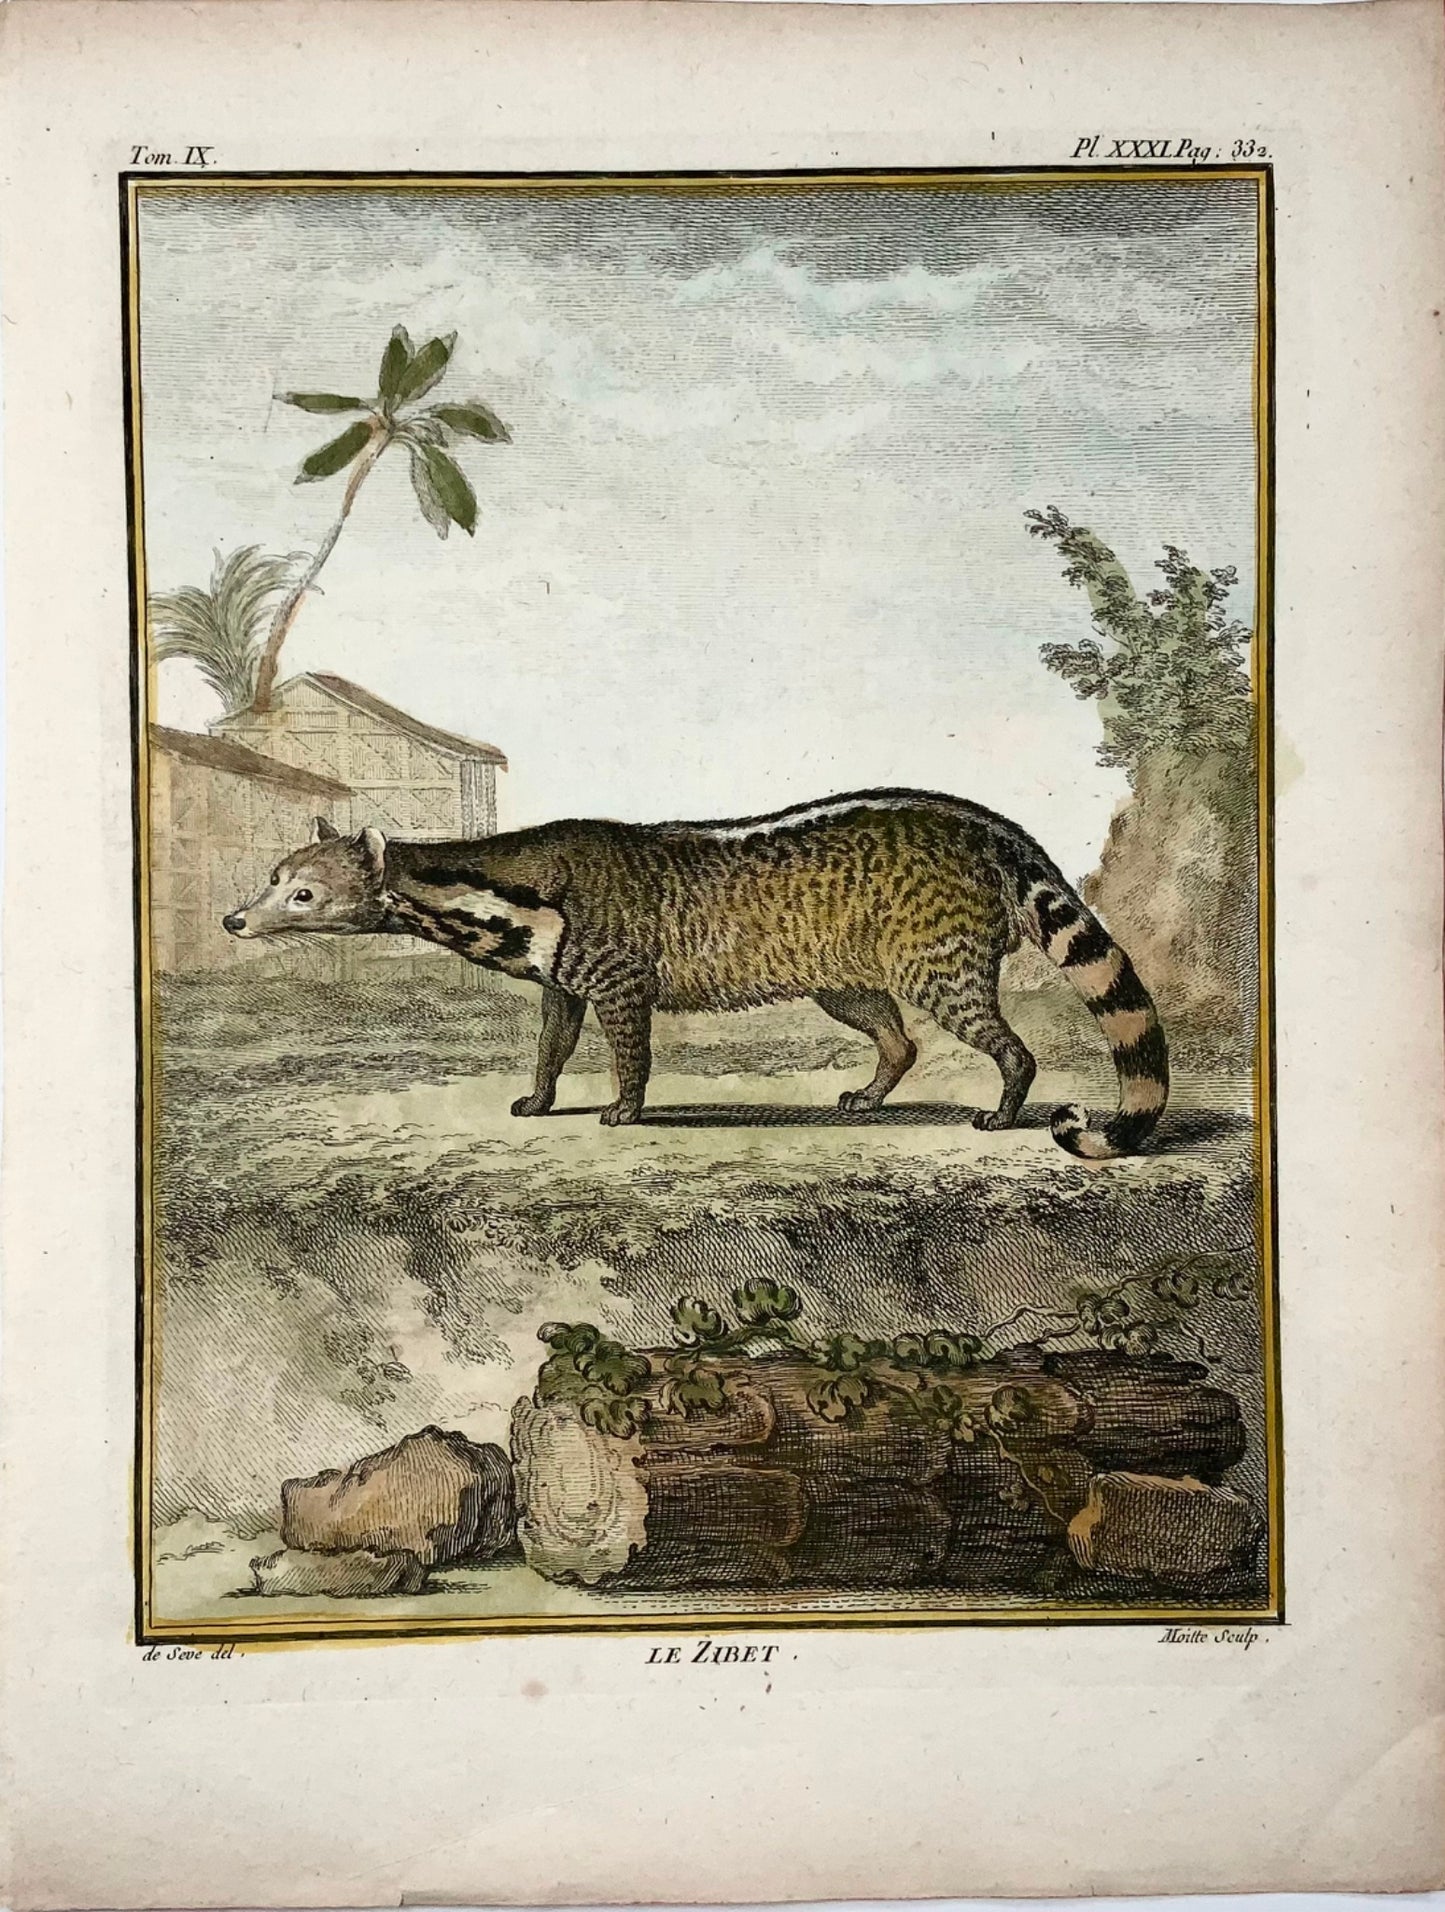 1779 Zibet; J. de Seve, Mammal, 4to engraving